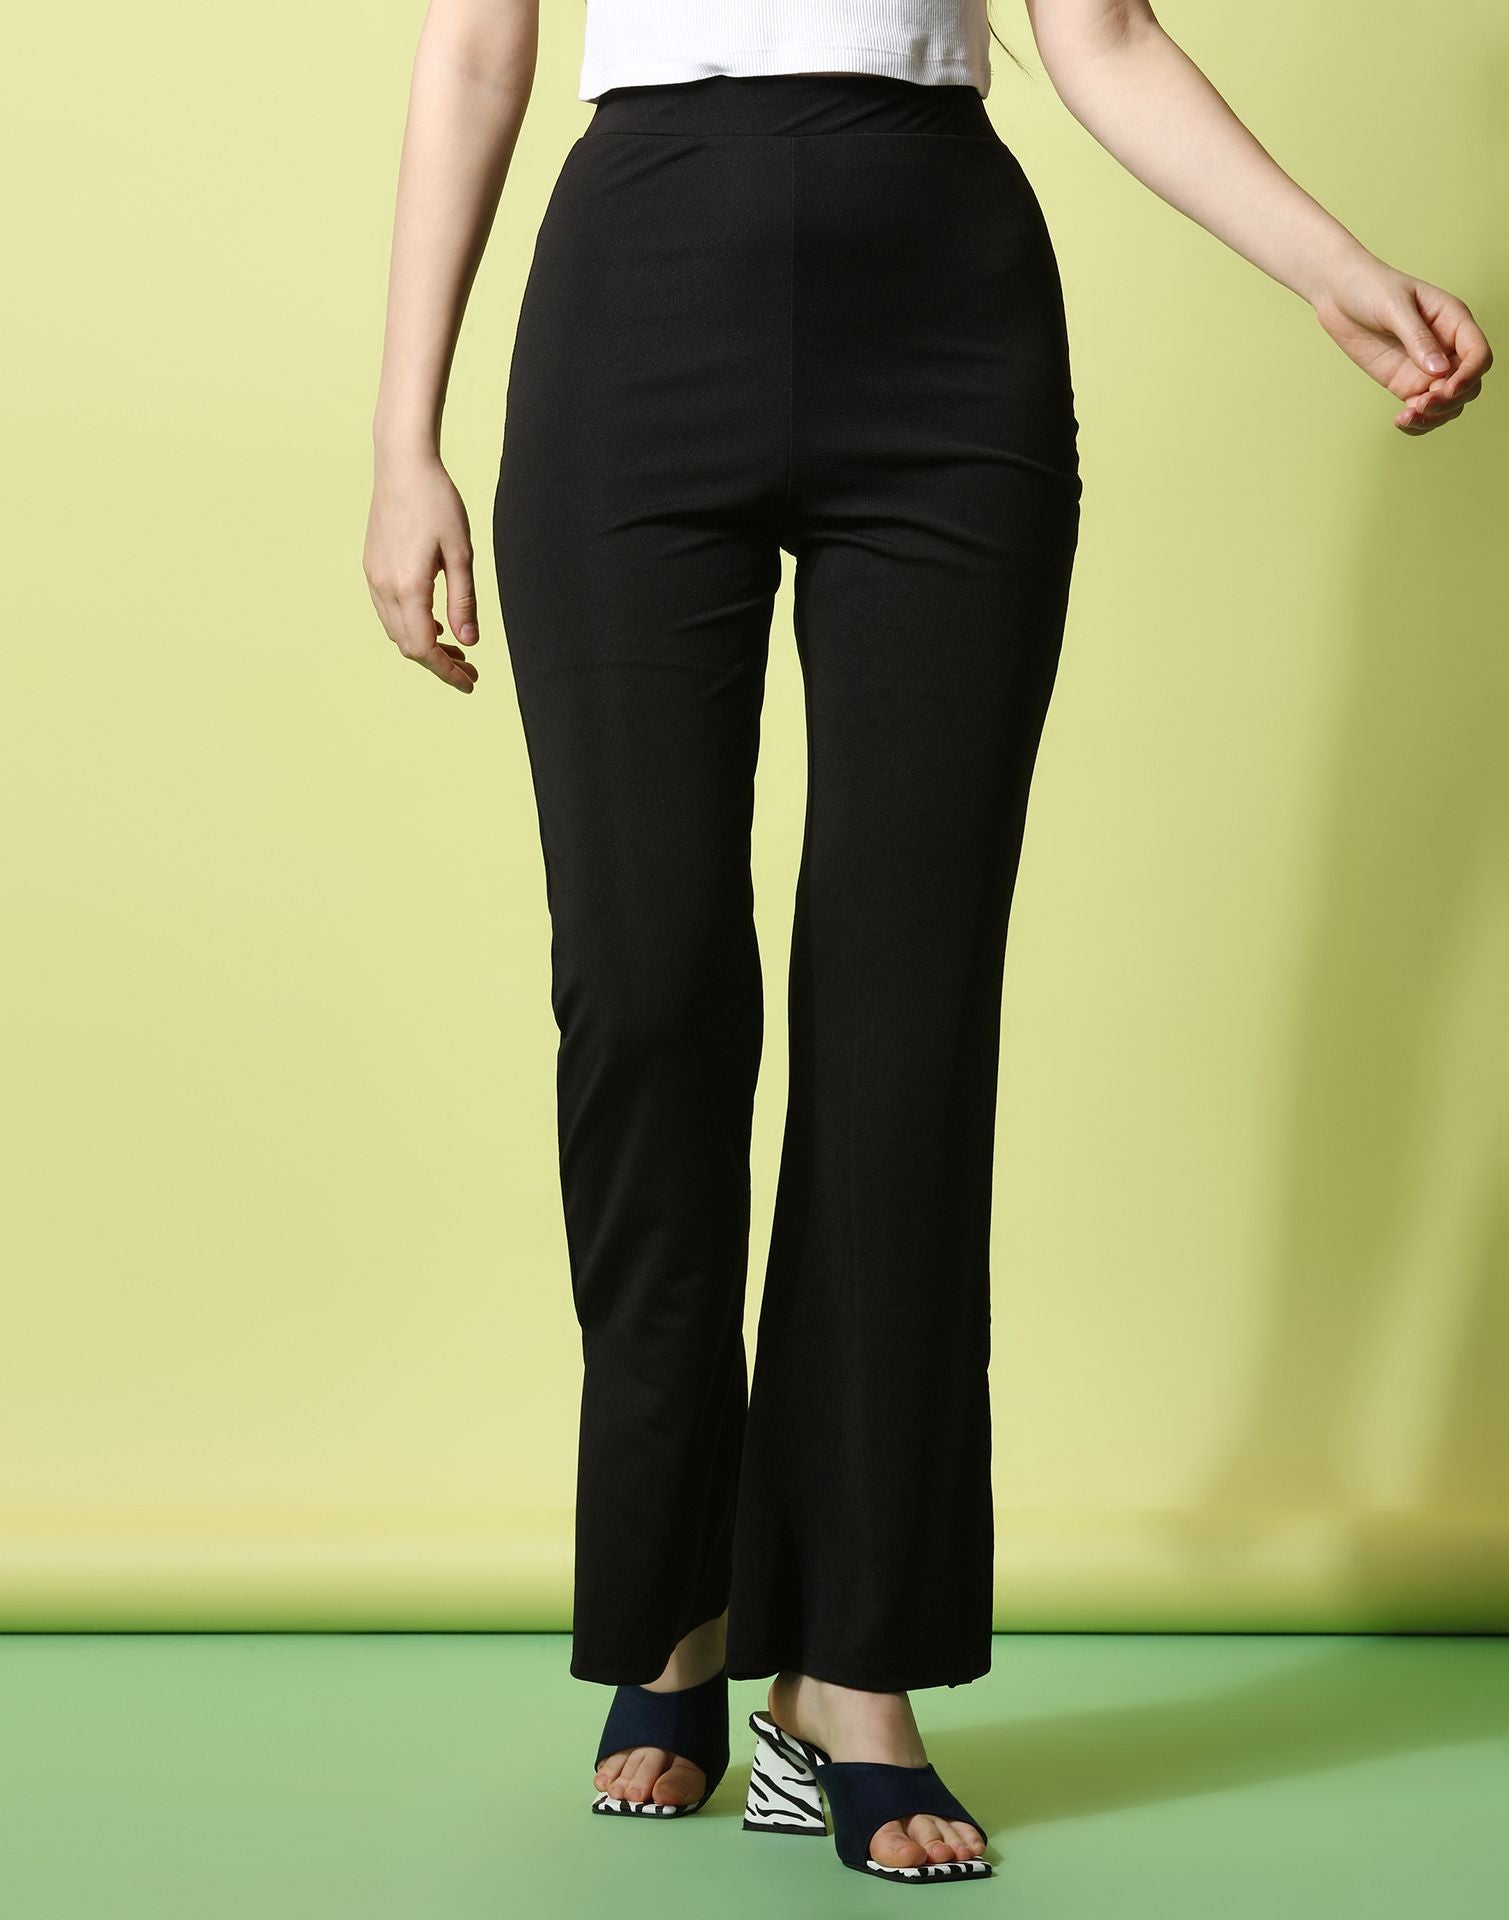 Douhoow Women Black Skinny Flare Pants Casual High Waist Long Trousers  Vintage Bell Bottom Pants - Walmart.com